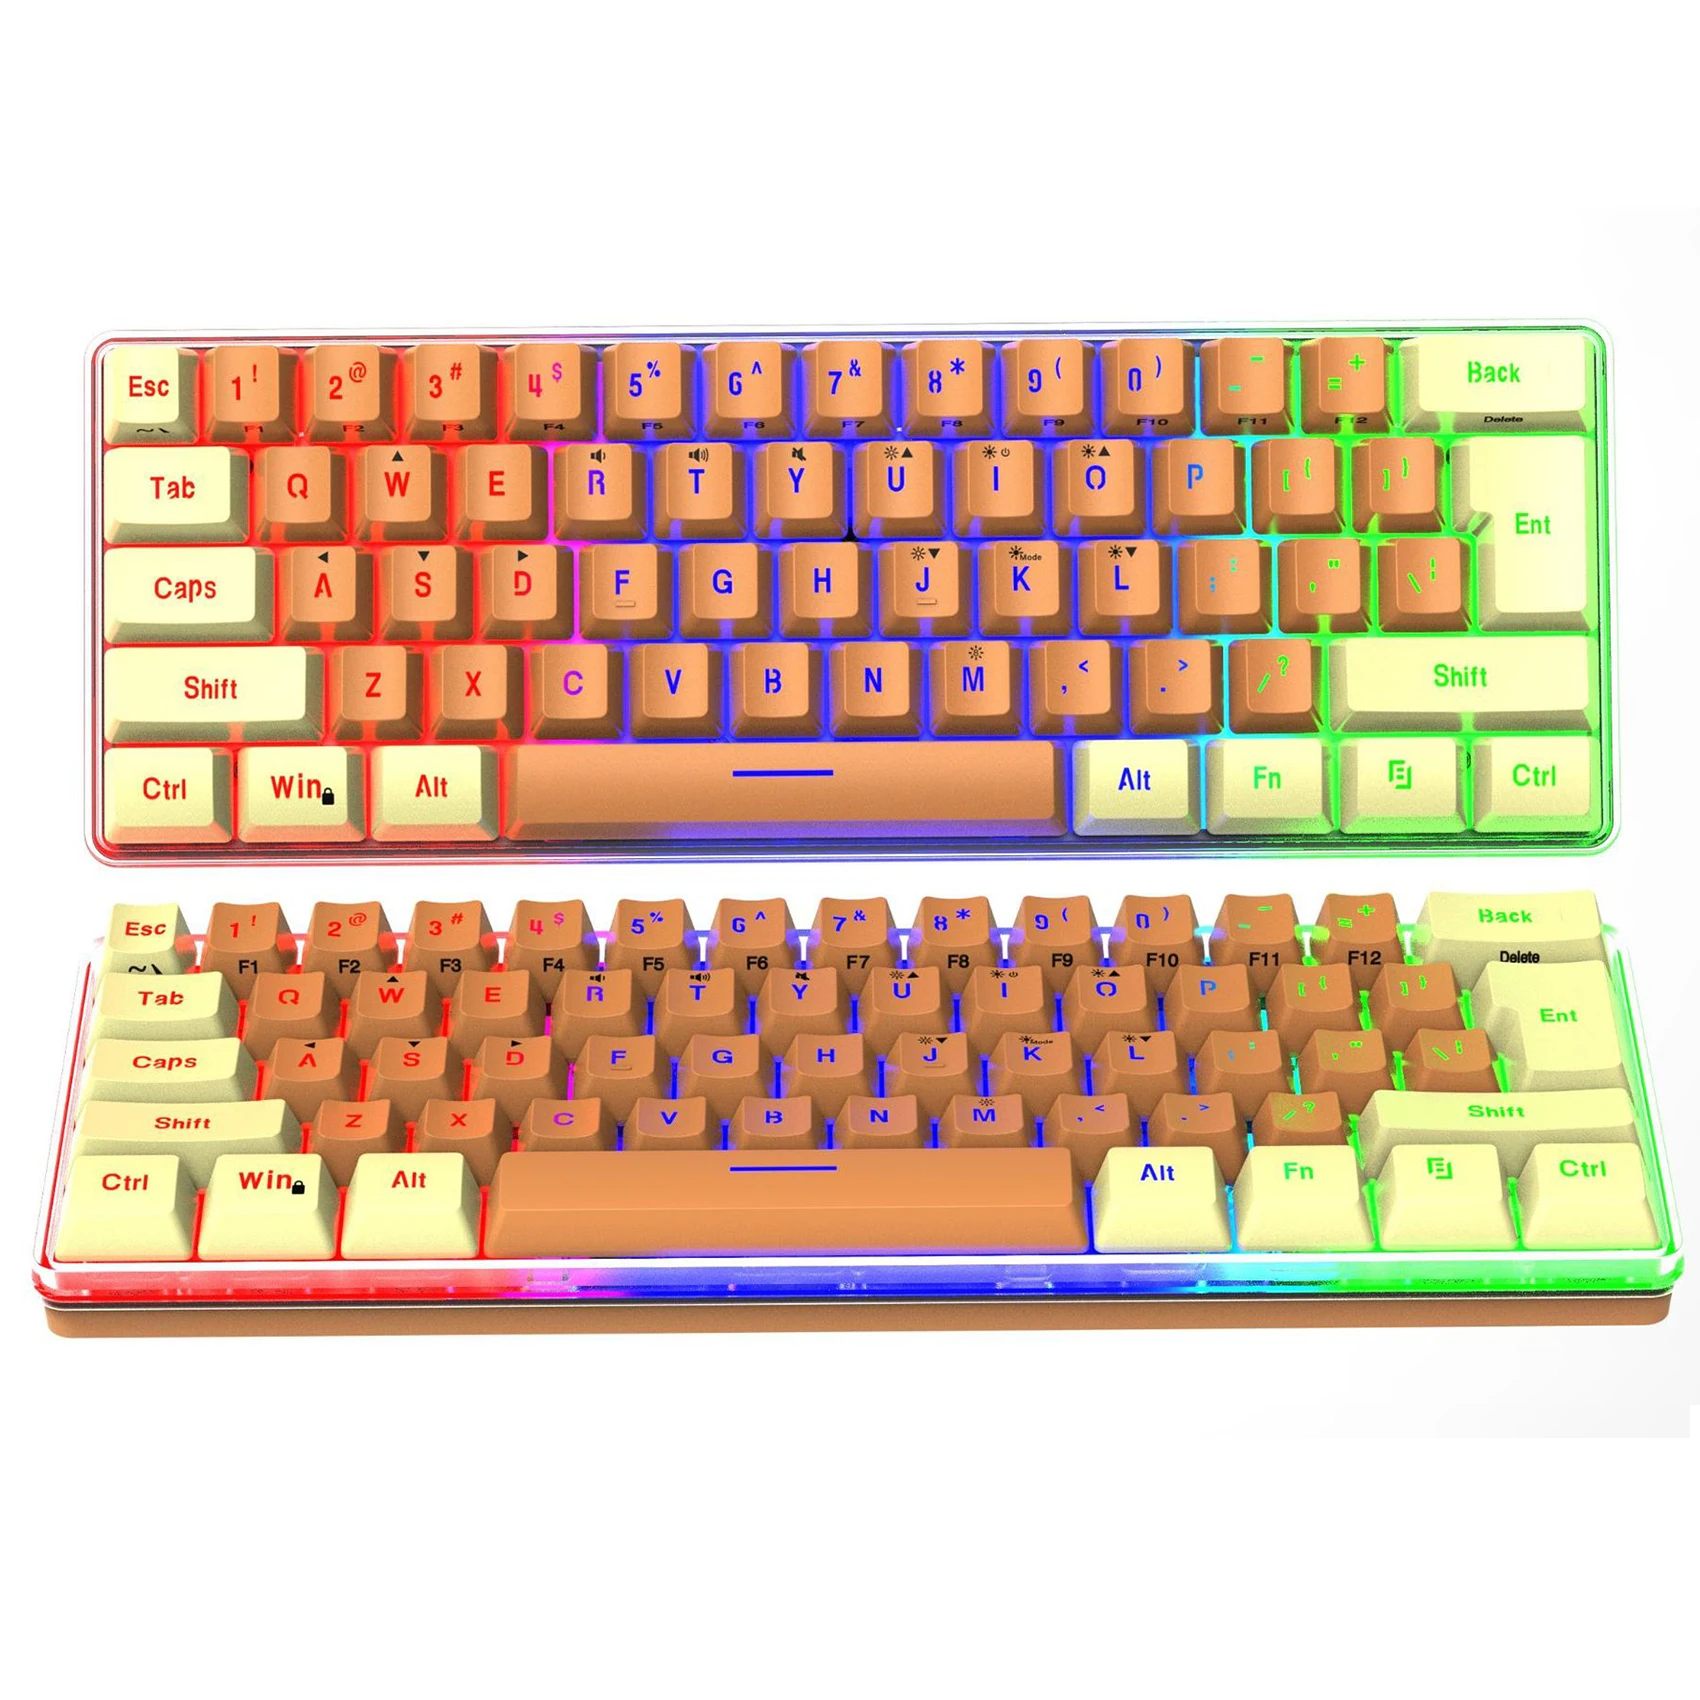 61 keys Rgb Translucent Mechanical Gaming Keyboard Teclado 60% LED Rgb Mechanical Keyboards